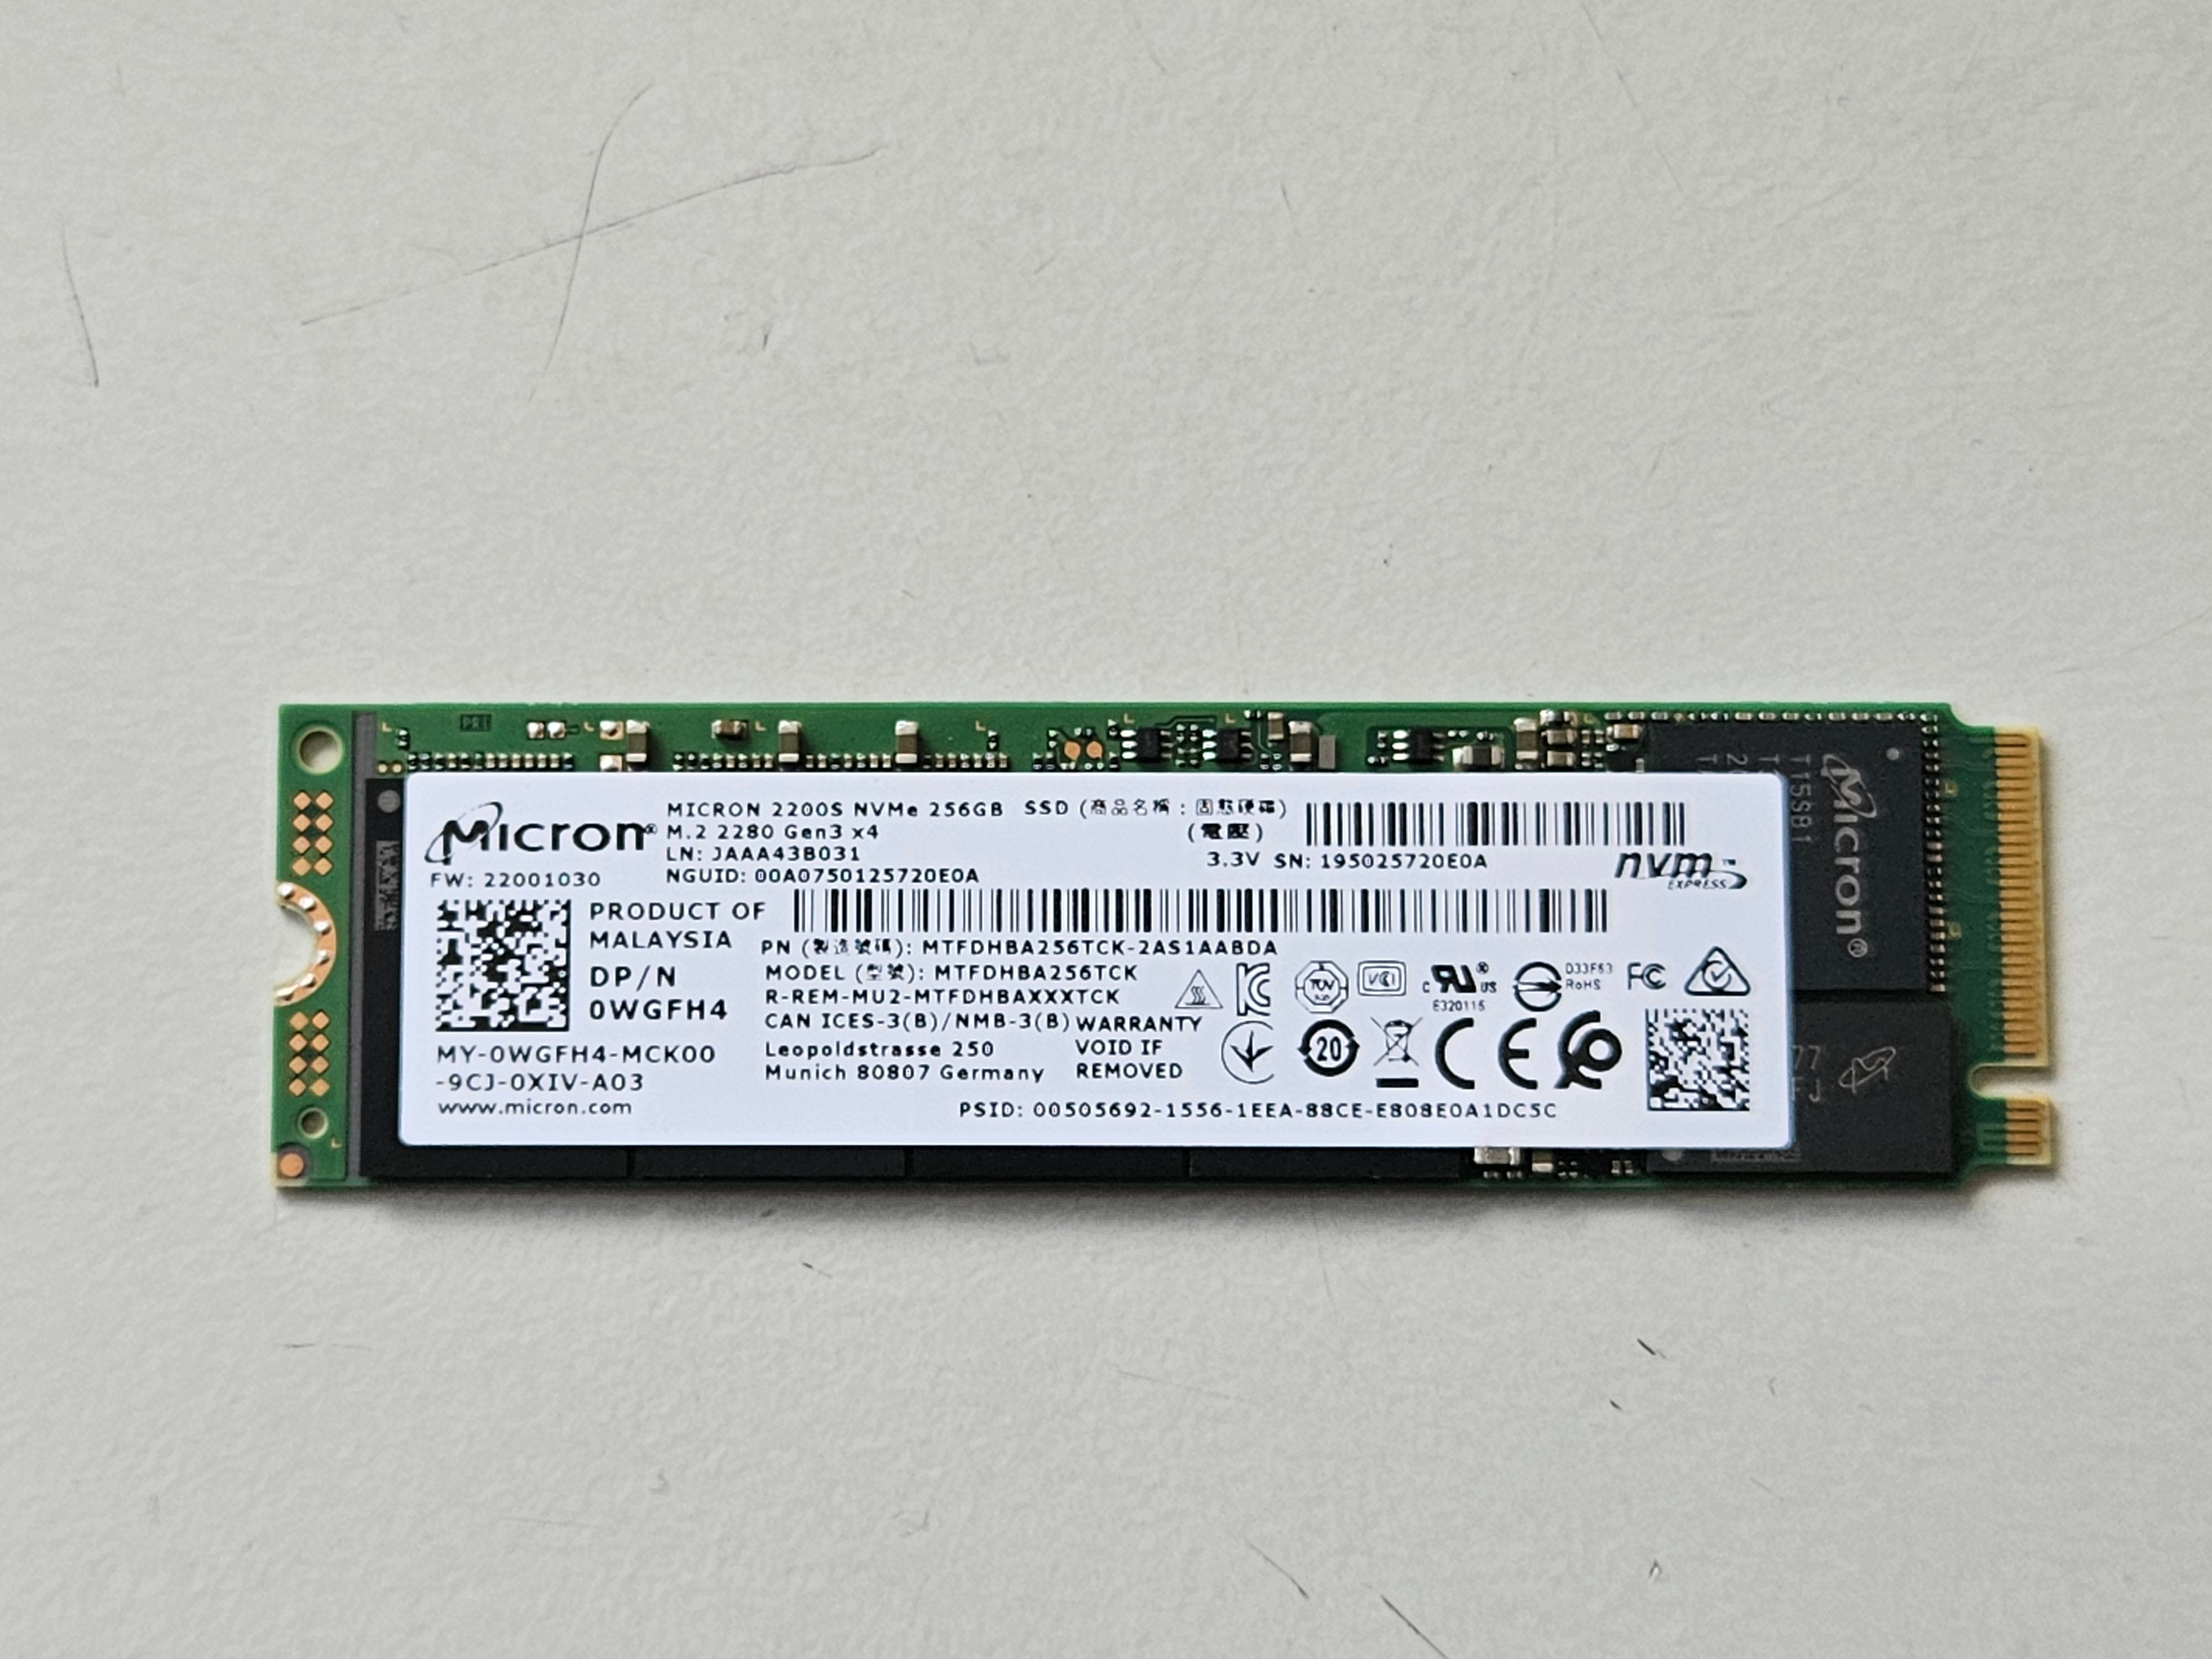 Micron Dell 2200S 256GB NVMe PCIE m.2 2280 Gen3 x4 SSD ( MTFDHBA256TCK-2AS1AABDA 0WGFH4 ) REF